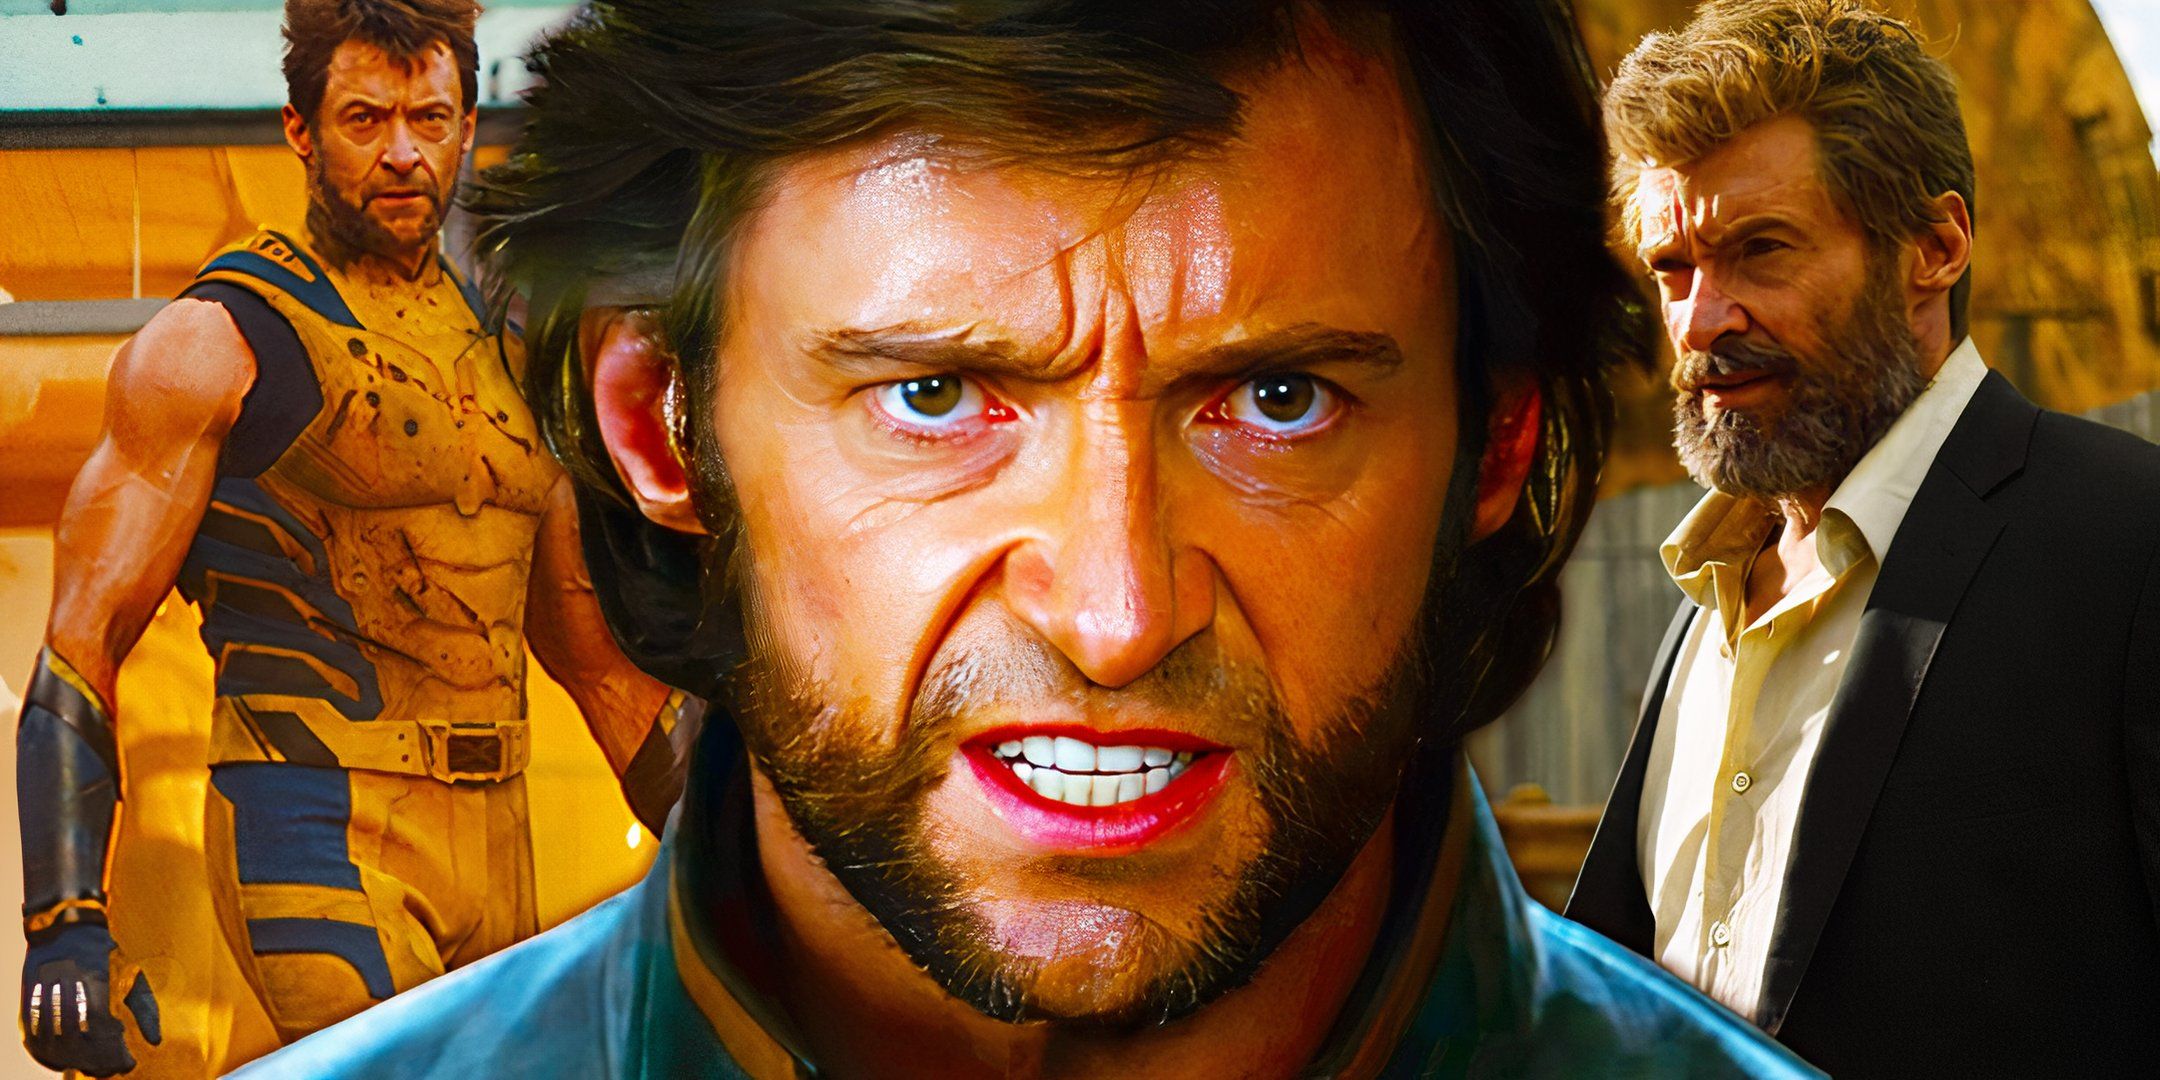 Hugh Jackman as Wolverine in X-Men Origins: Wolverine, Logan, and Deadpool & Wolverine